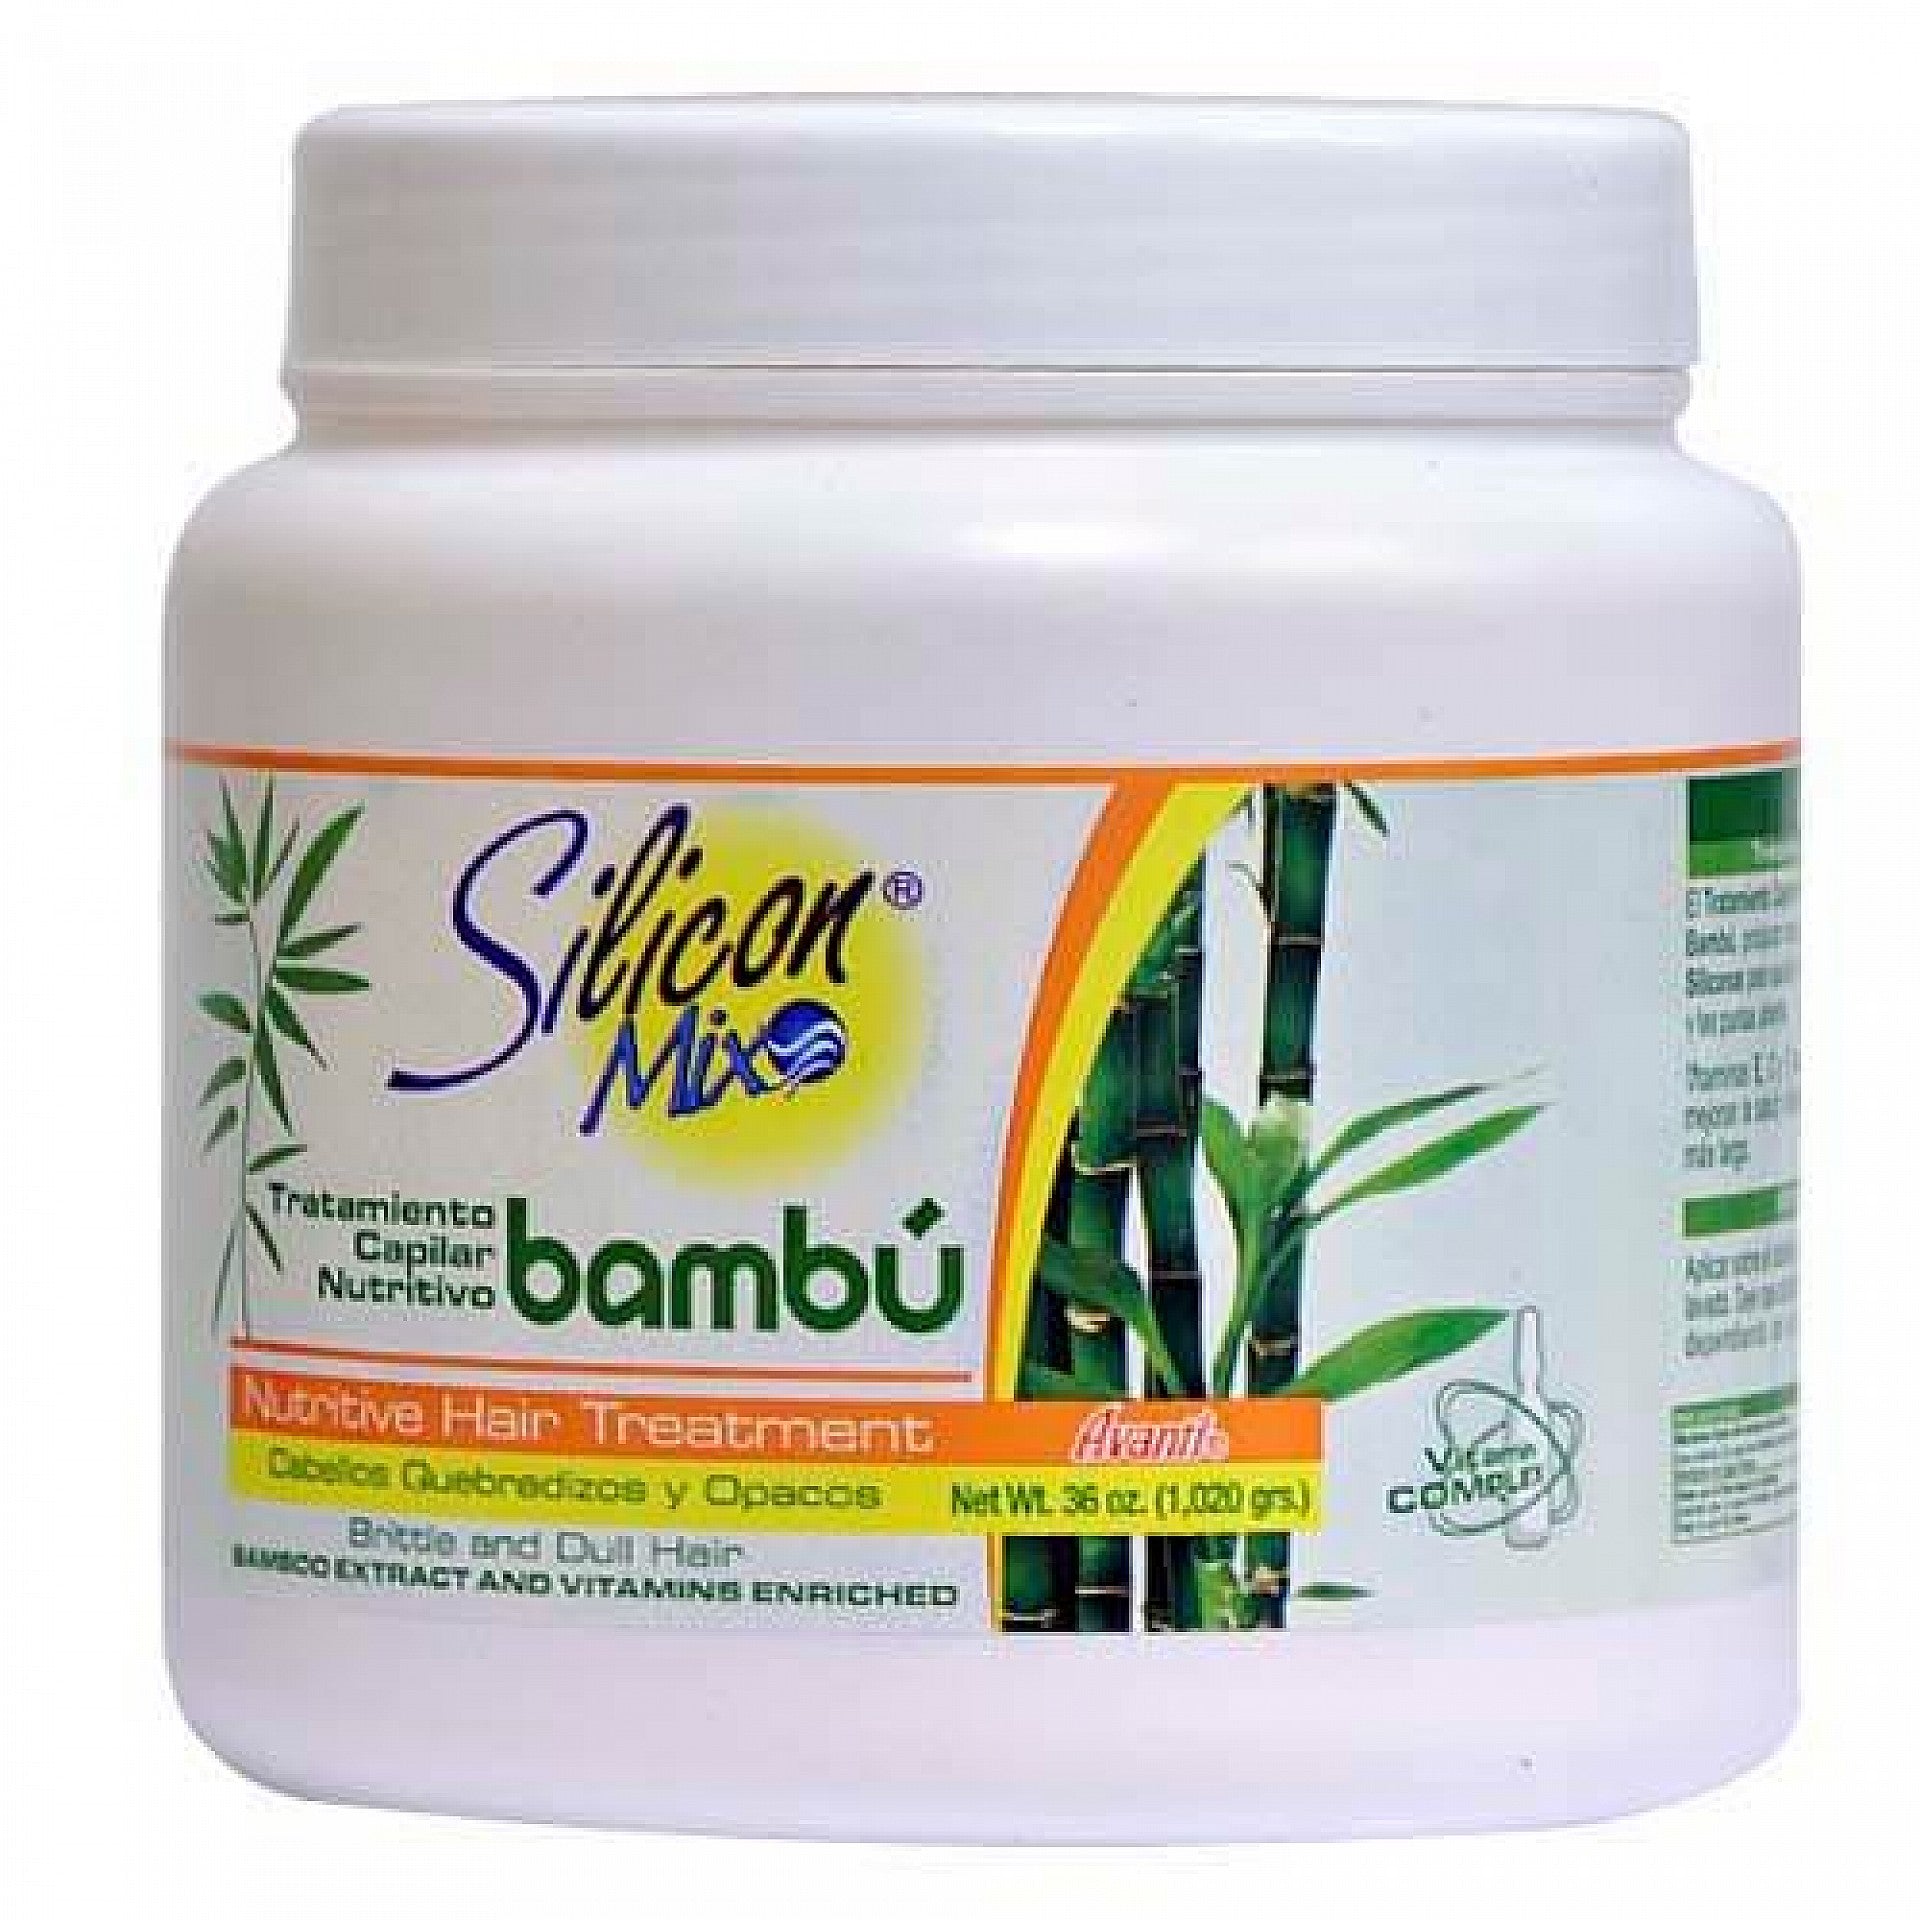 Silisium mix bambus næringshårbehandling 36oz